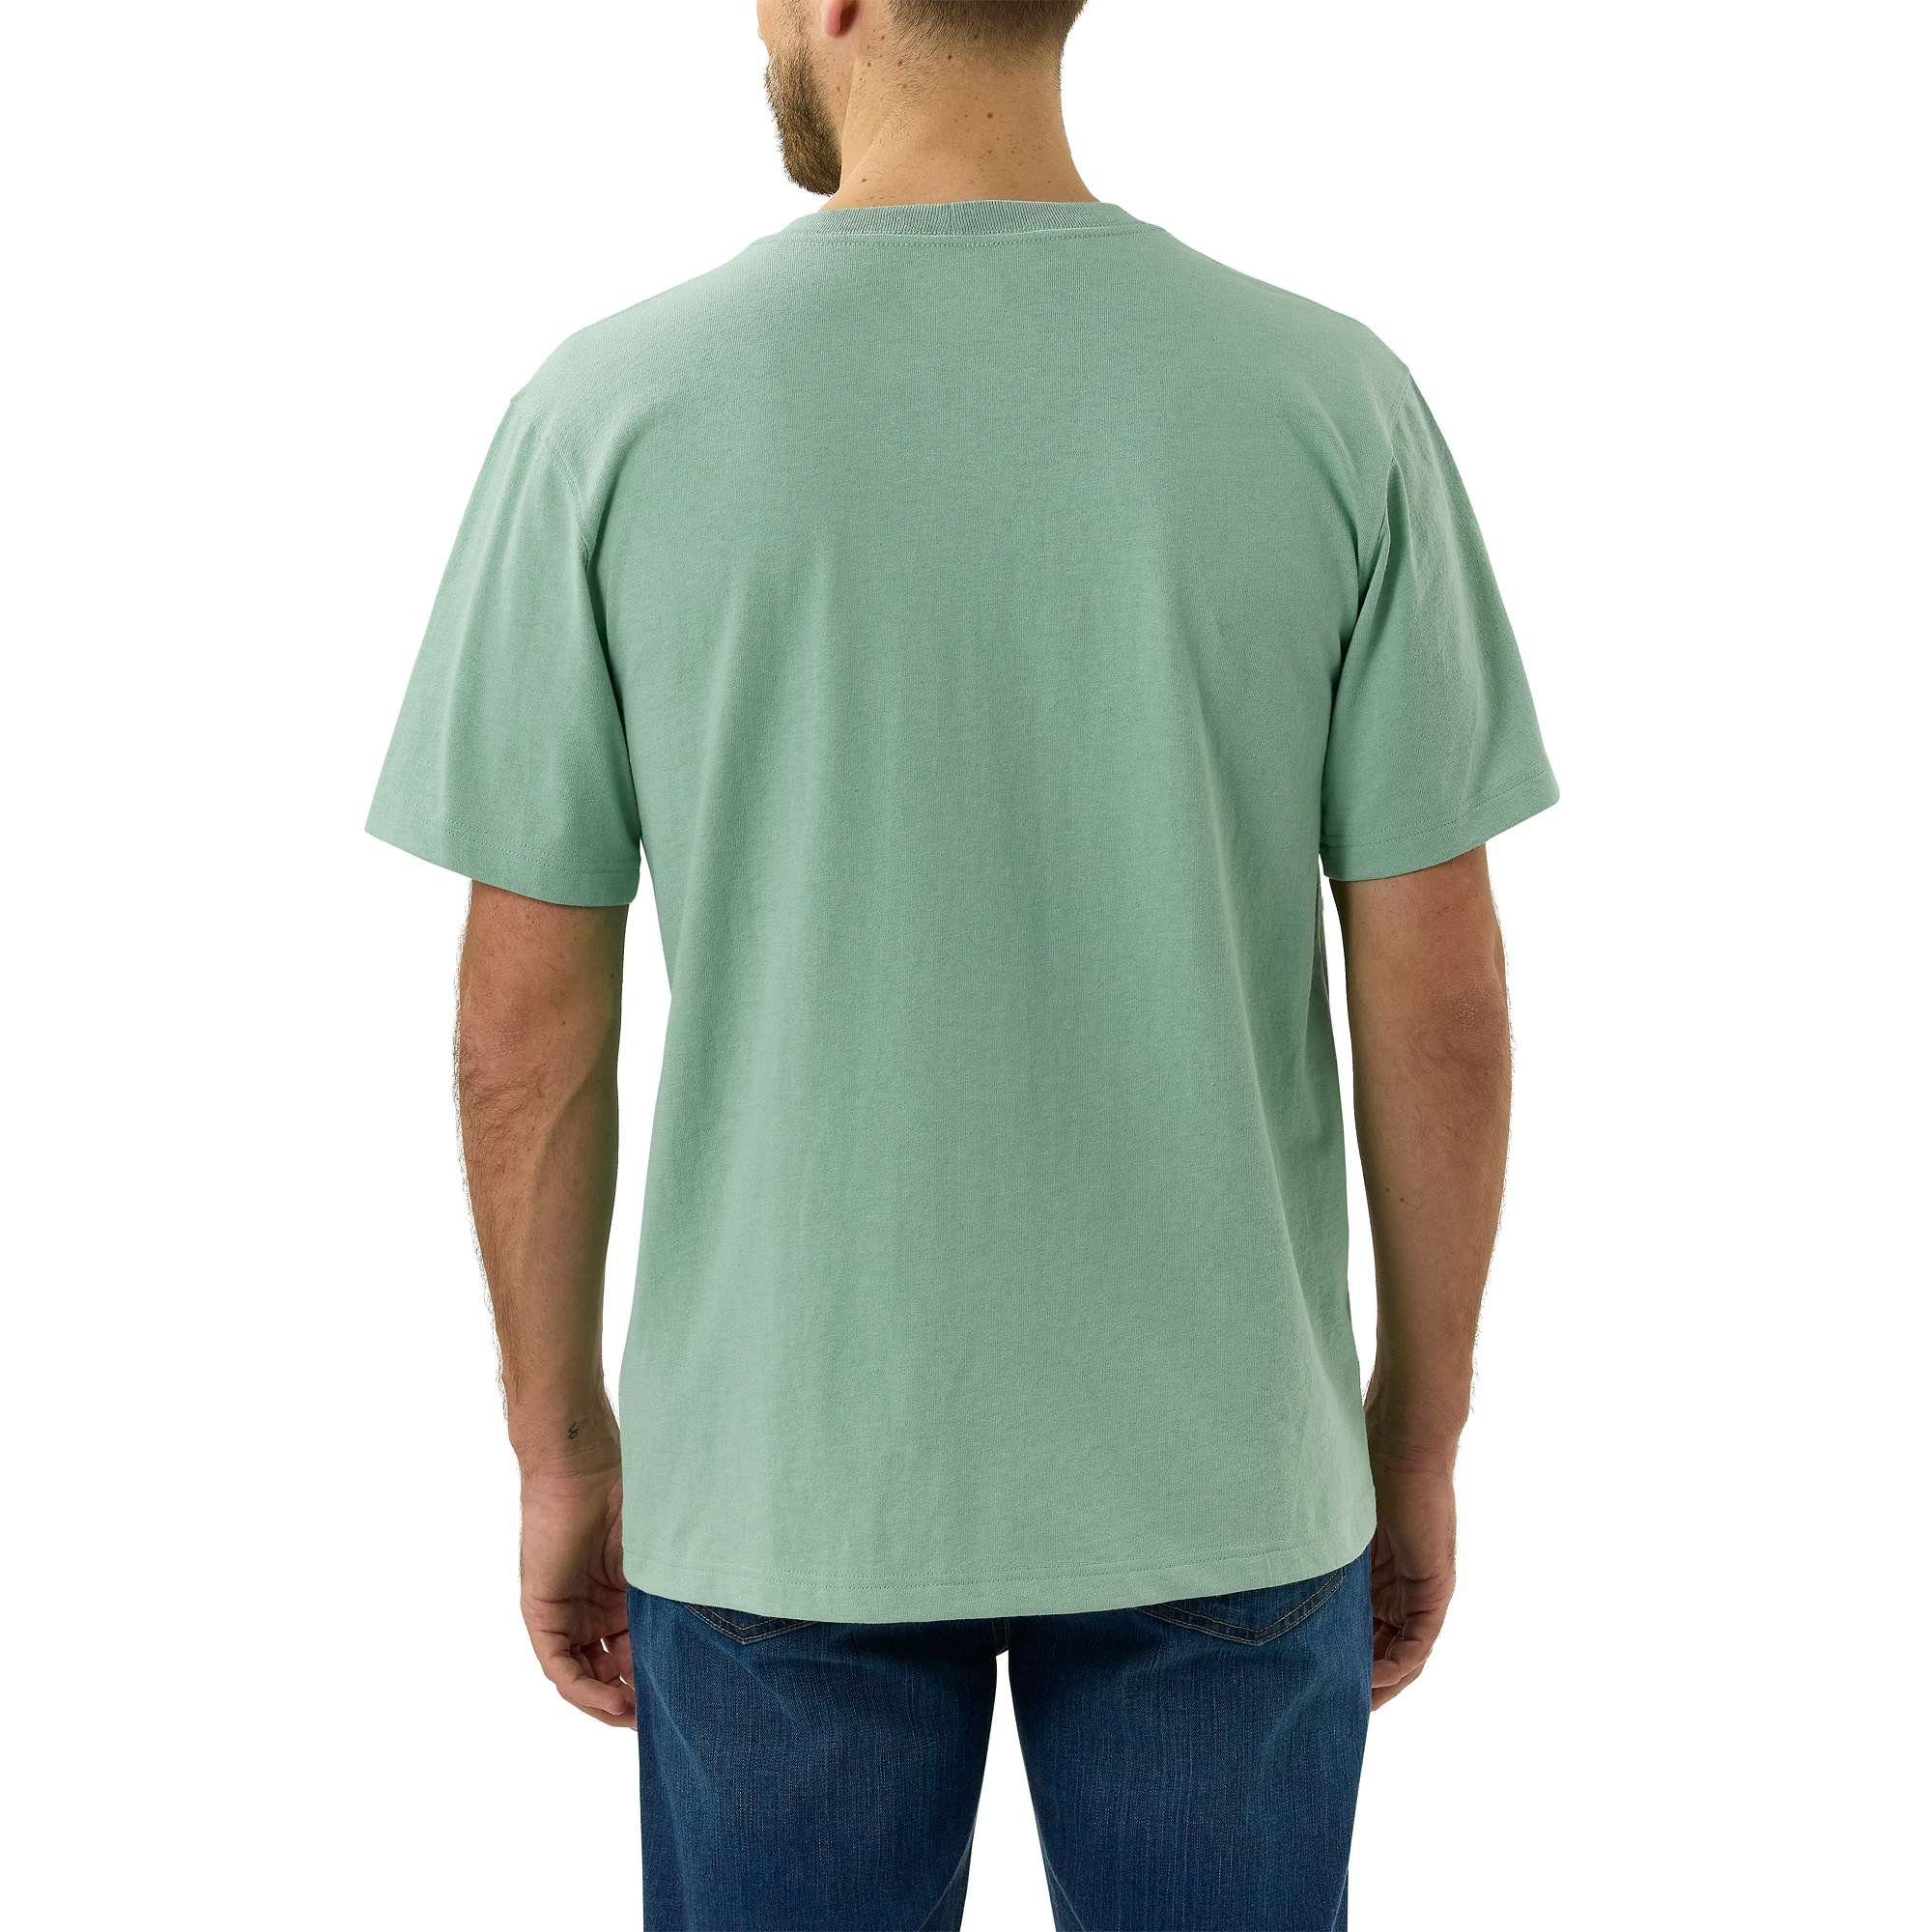 SeaGreen T-Shirt Pocket Relaxed K87 Carhartt Fit